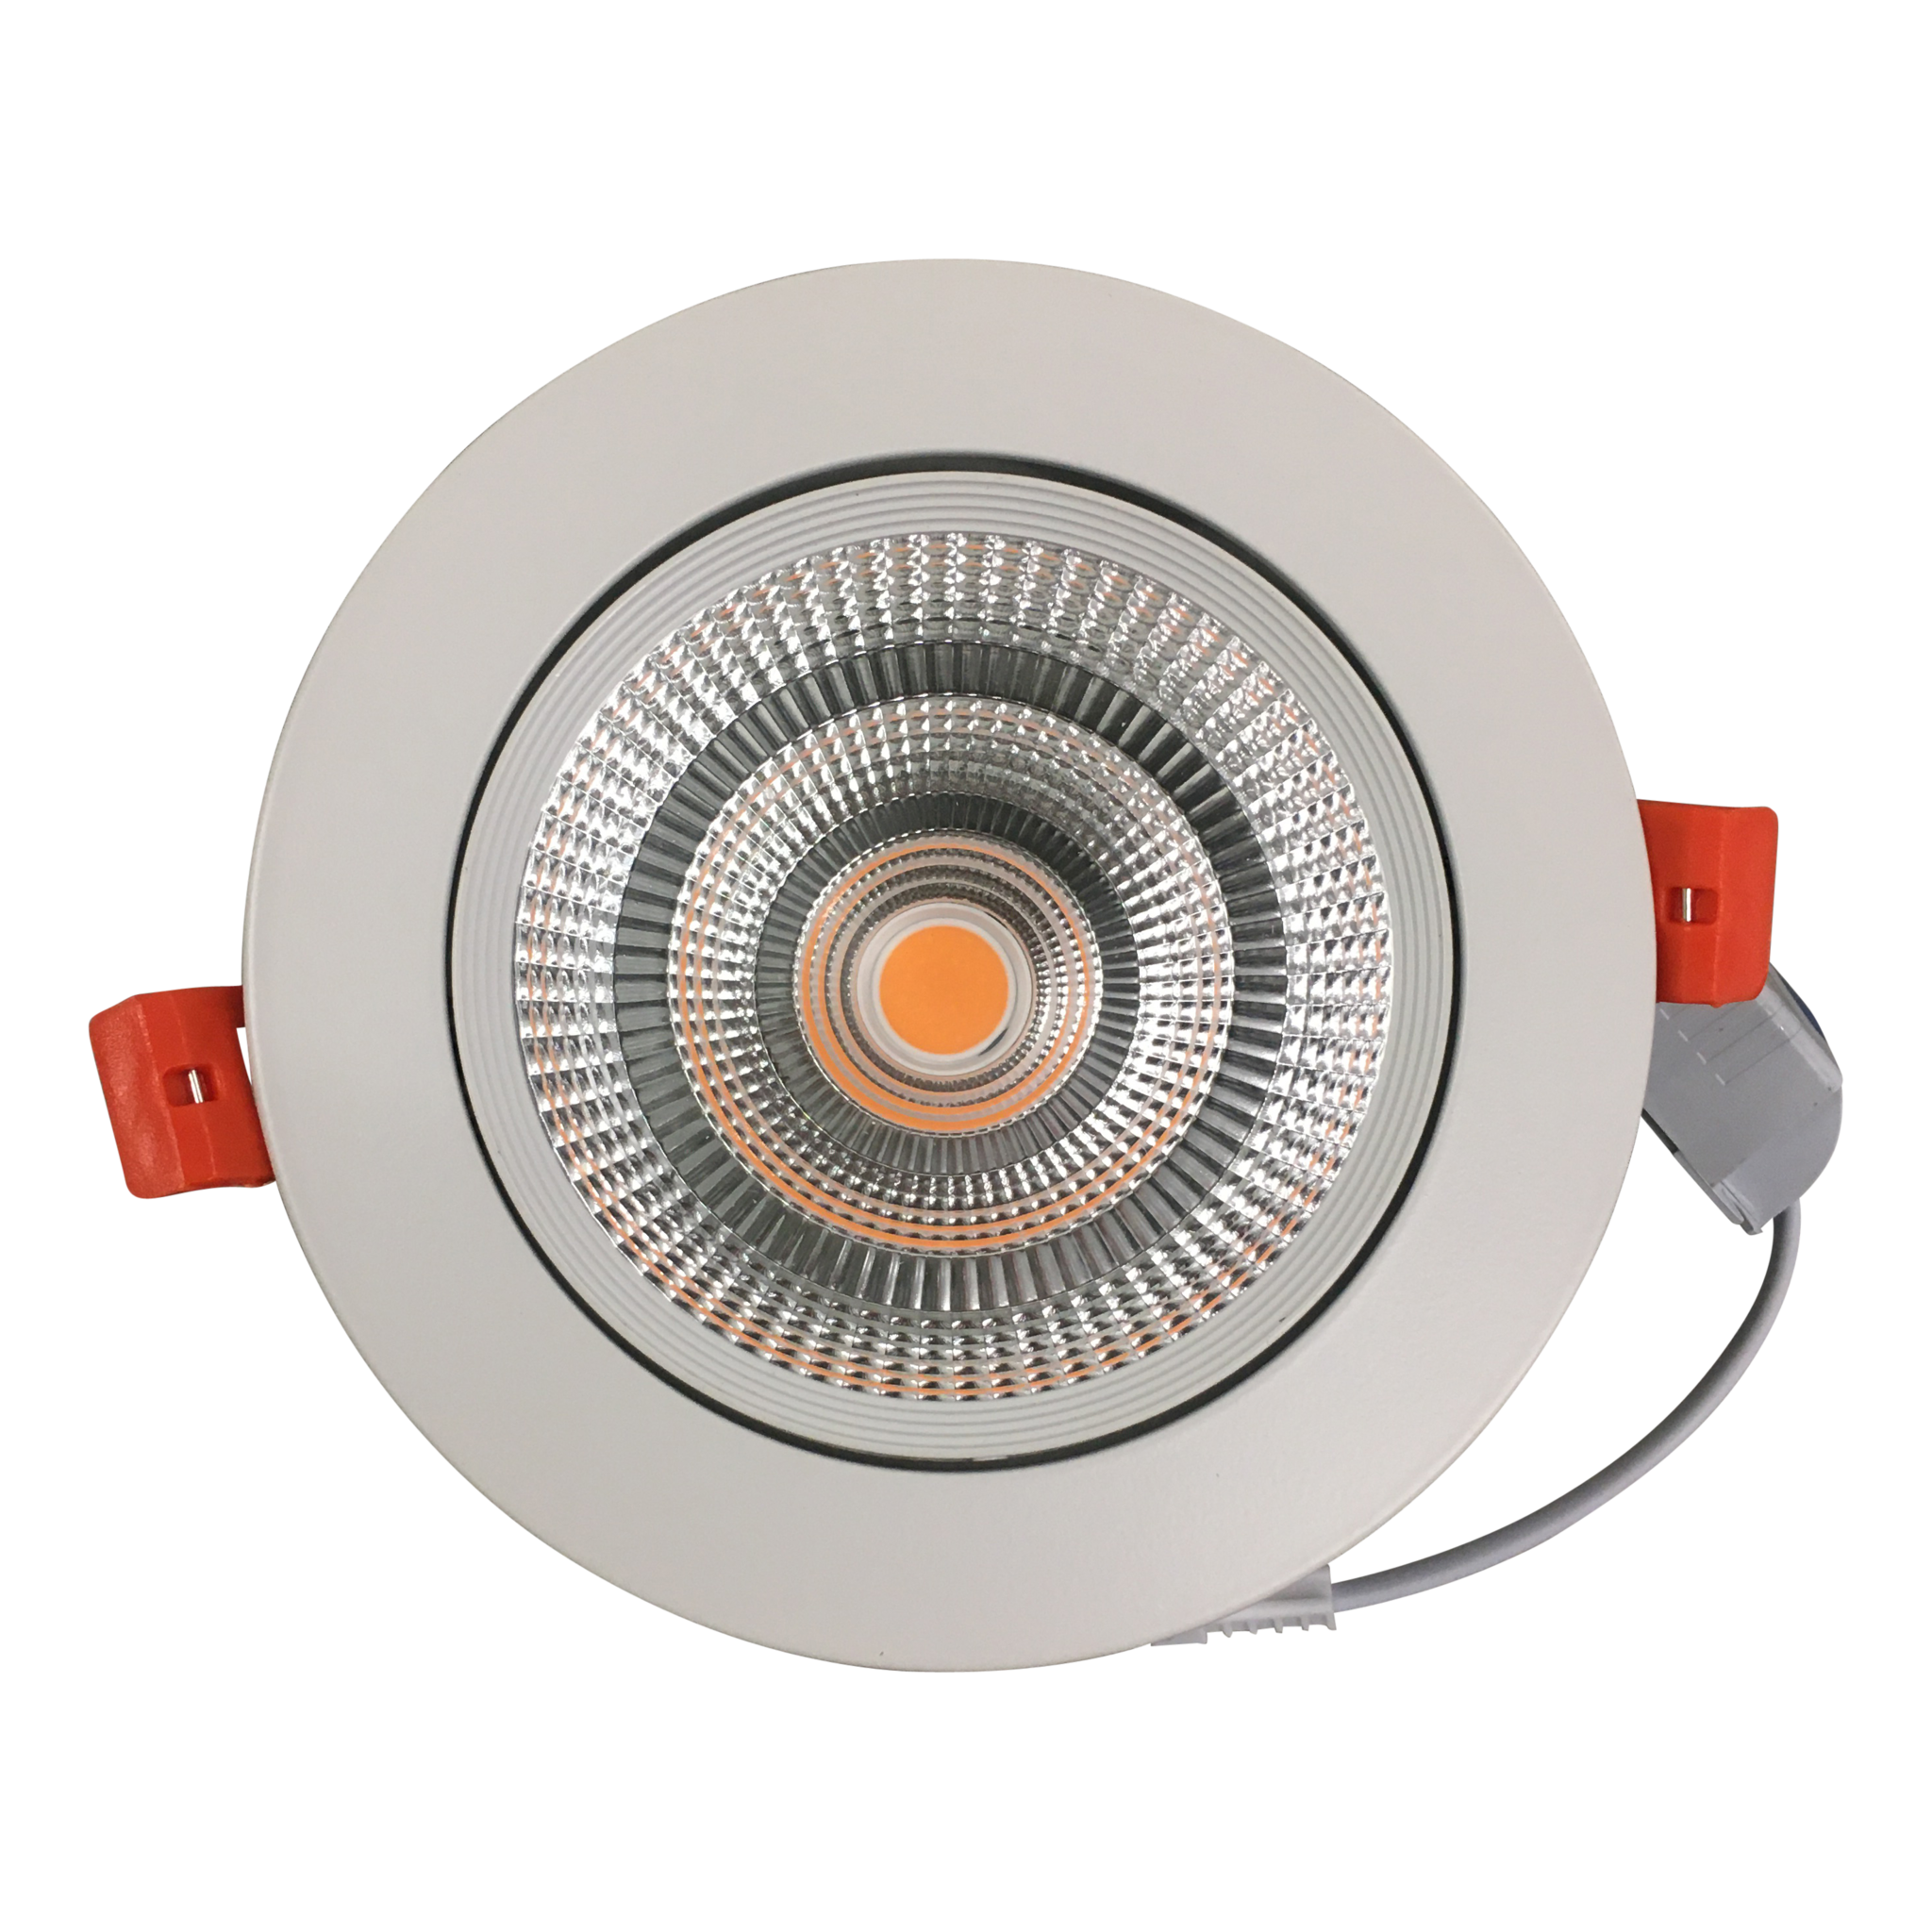 Spot encastrable Quimby LED intégrée blanc chaud IP20 dimmable 350lm 5.5W  Ø8.5xH.5.2cm blanc GoodHome